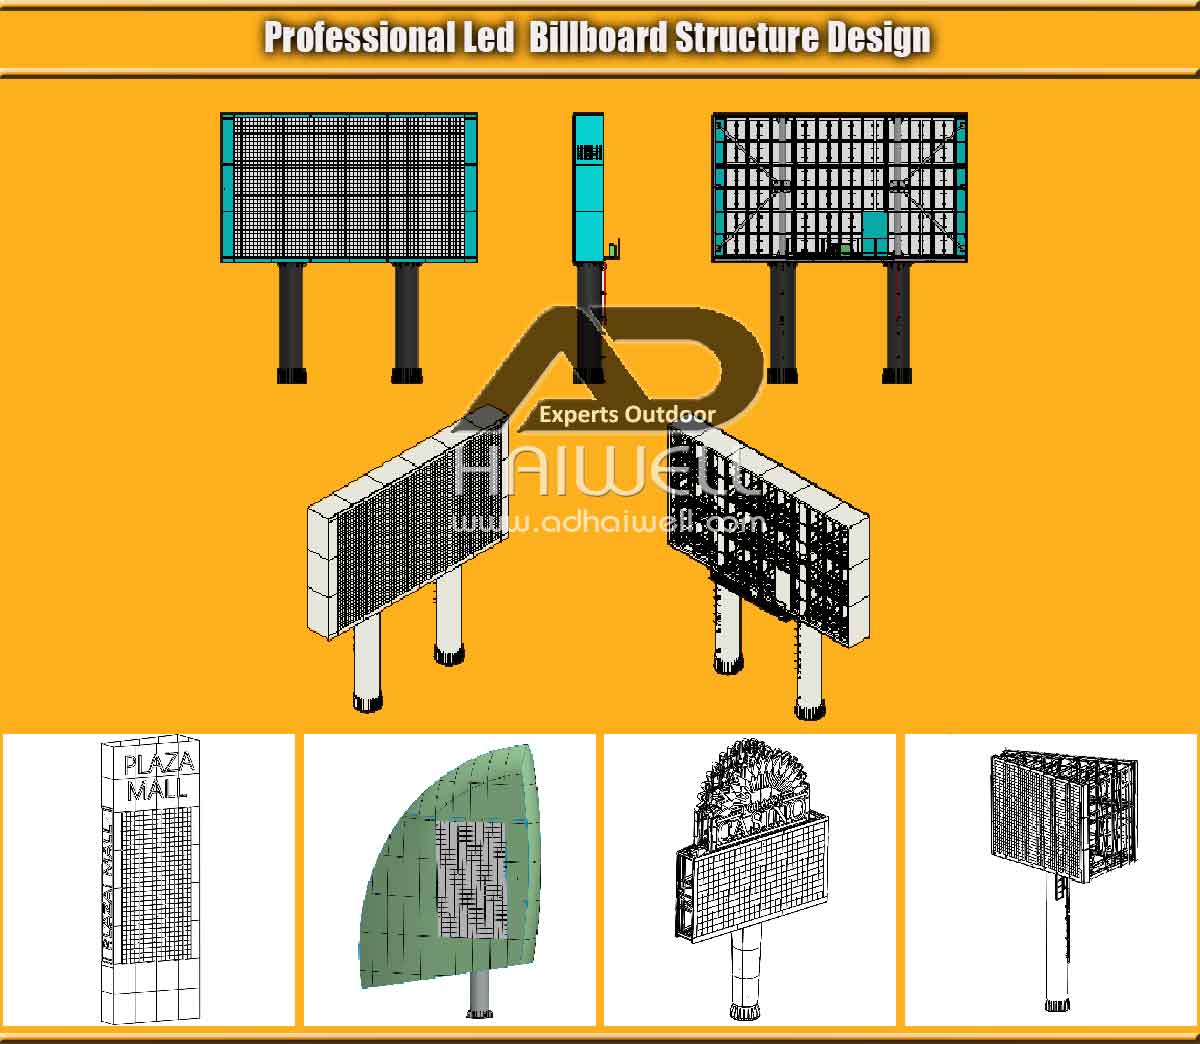 Professionale-LED-Billboard-Structure-Design